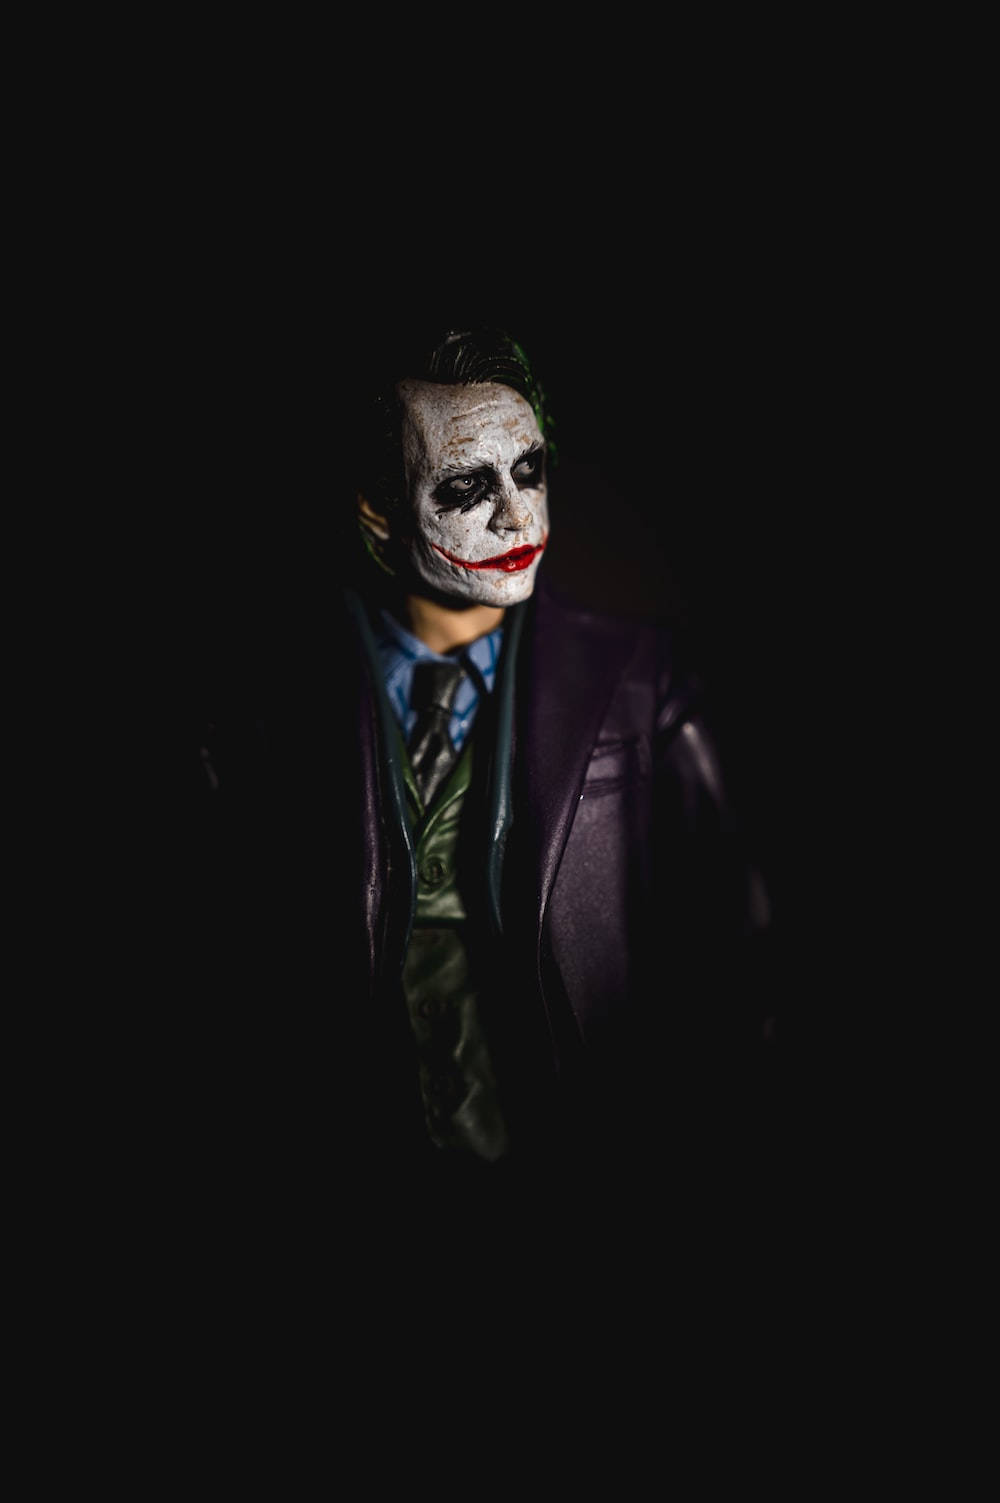 Download Joker Phone In The Shadows Wallpaper | Wallpapers.com